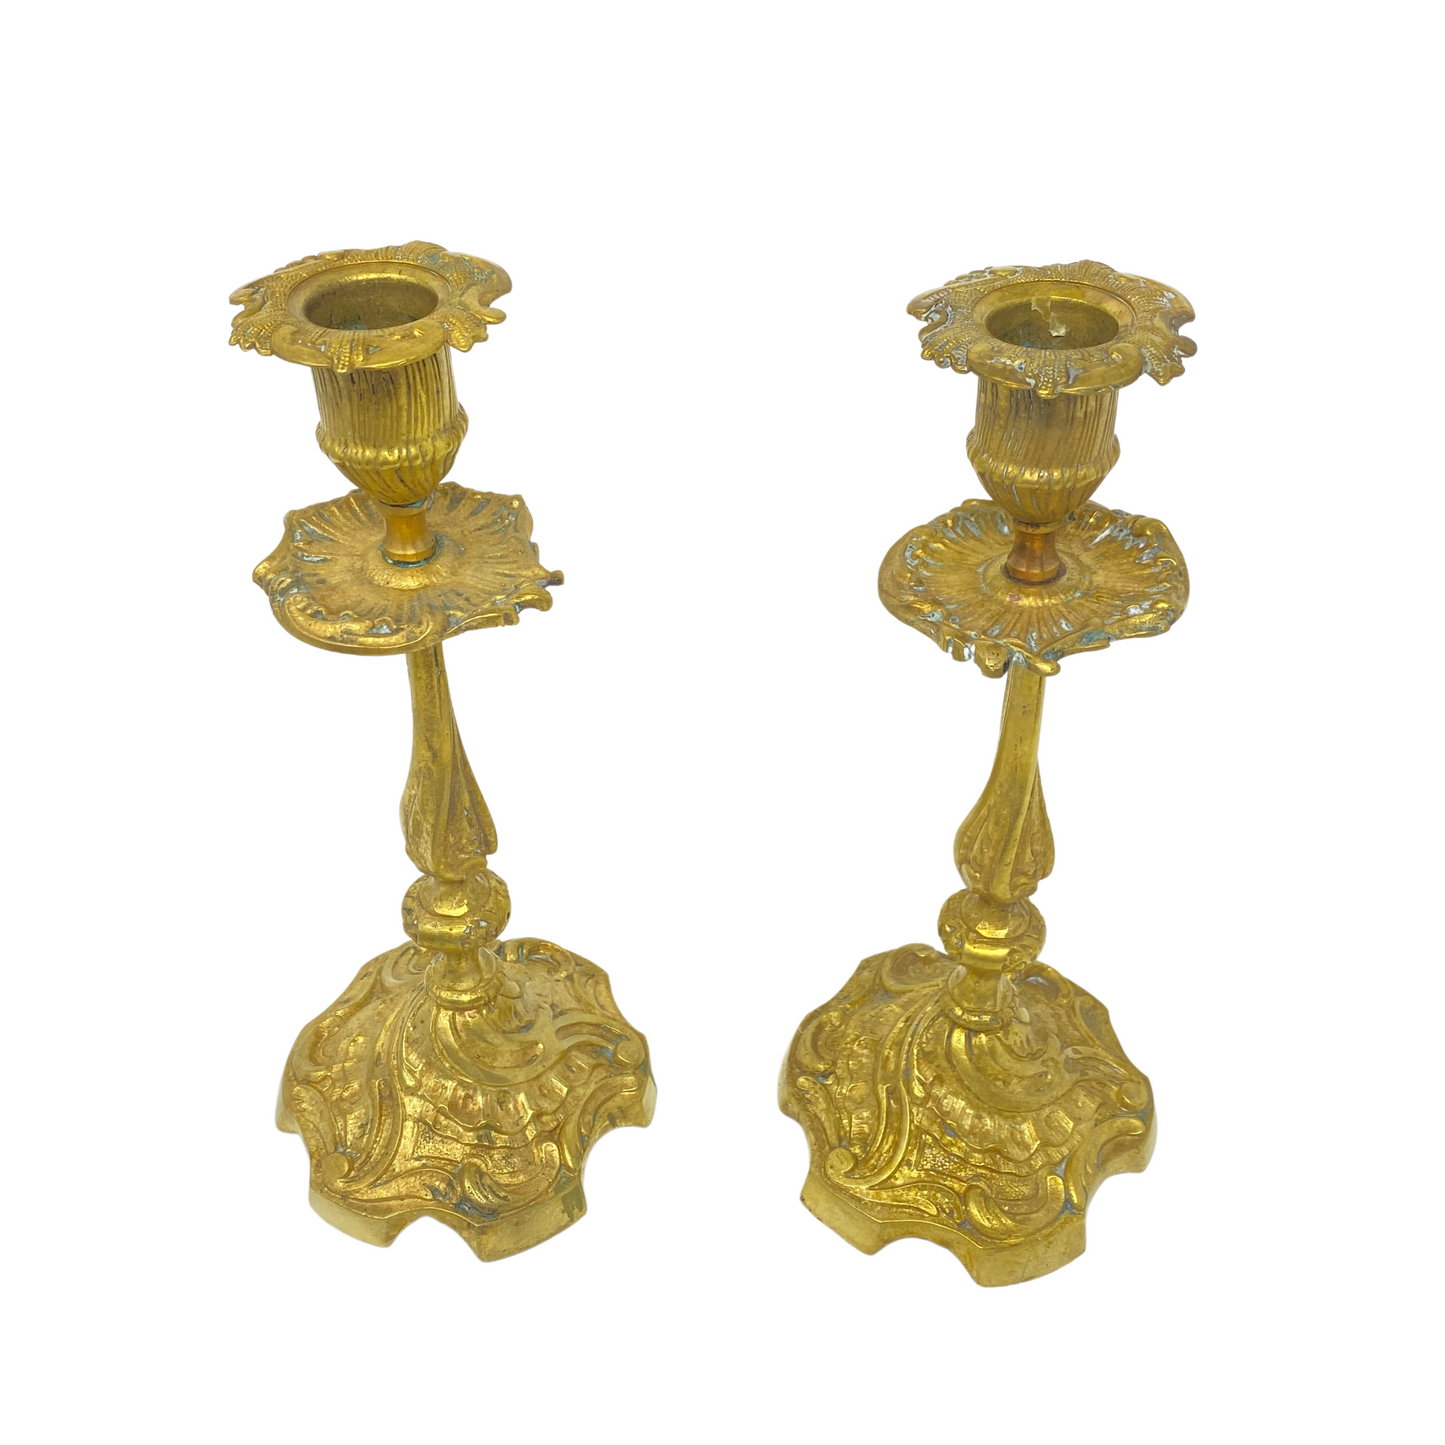 Antique French Art Nouveau Gilt Brass & Copper Candlesticks